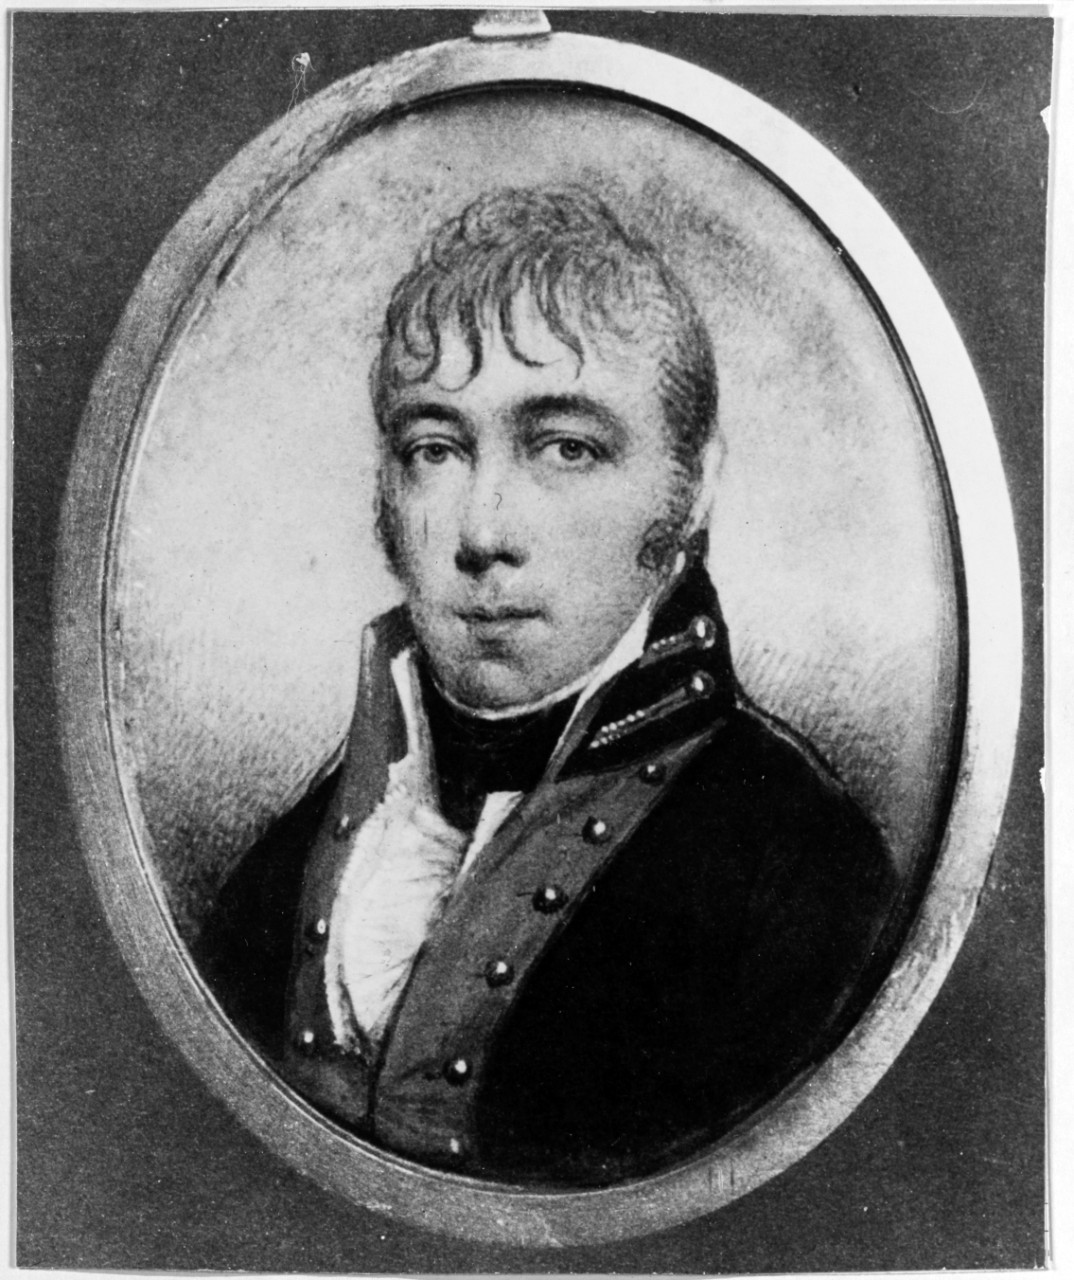 Photo #: NH 51541  Lieutenant William Bainbridge, USN (1774-1833)